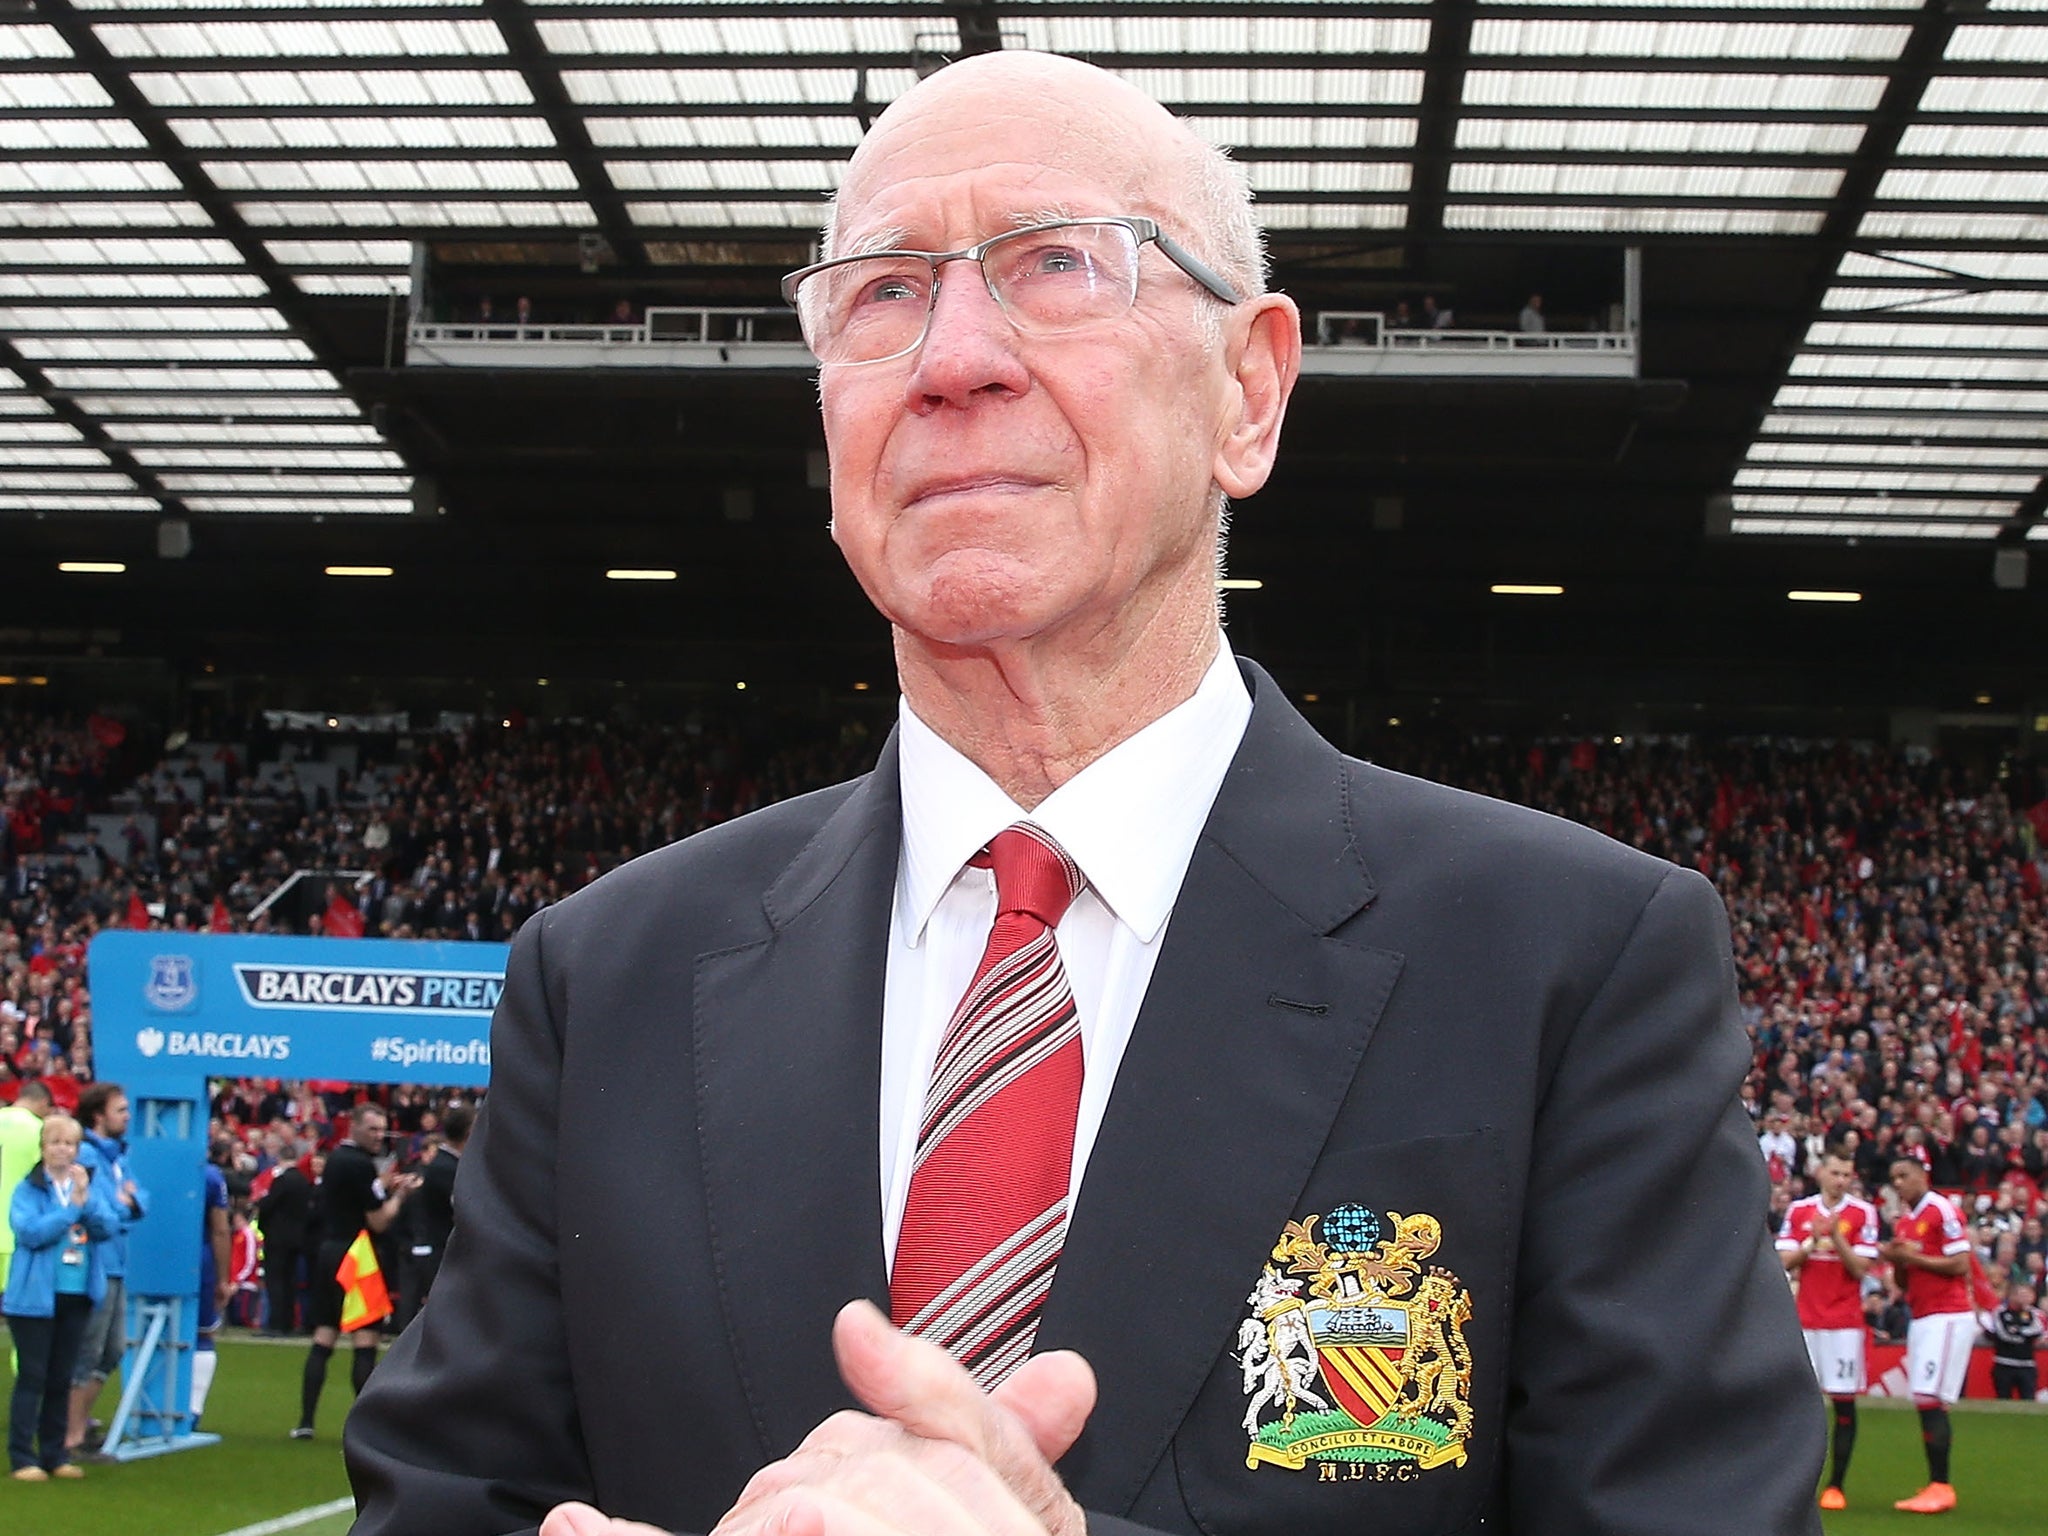 Manchester United board member Sir Bobby Charlton